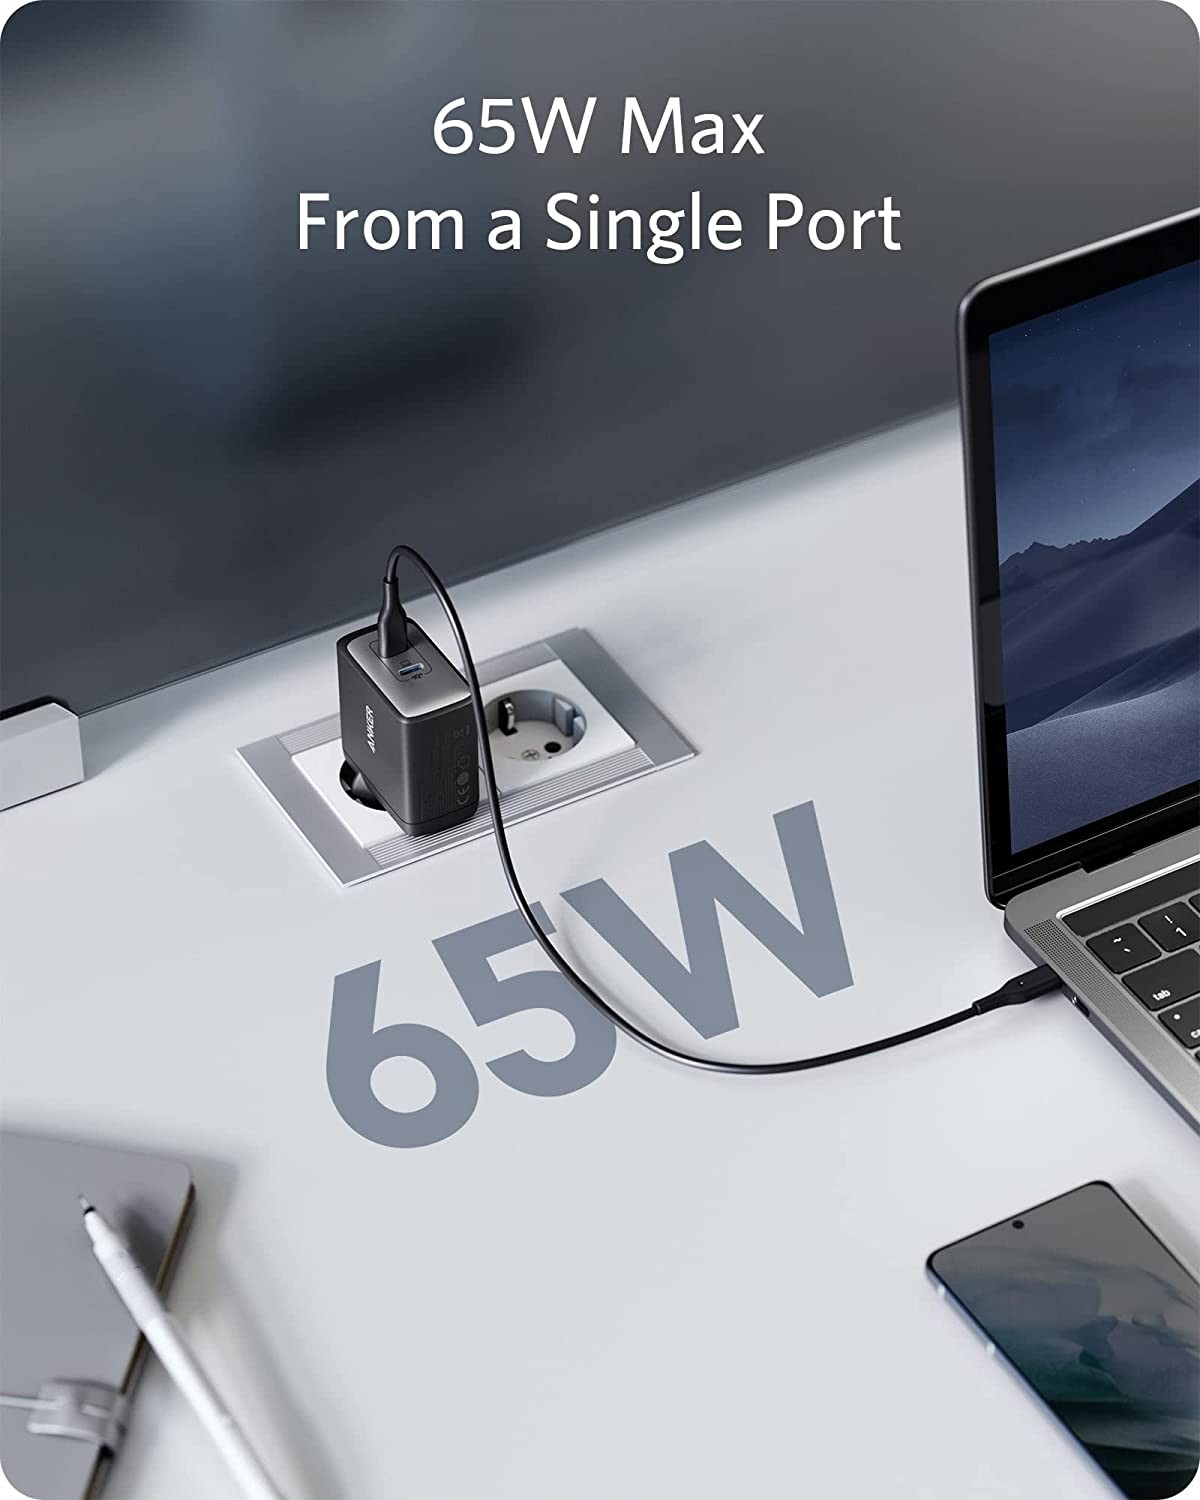 Anker PowerPort III 65 W 2 Ports USB-C Chargeur Compact avec Puissance de Charge Rapide, Compatible avec MacBook Pro/Air, iPad Pro, Galaxy S20/S10, Dell XPS 13, Note 20/10+, iPhone 13/12, Pixel